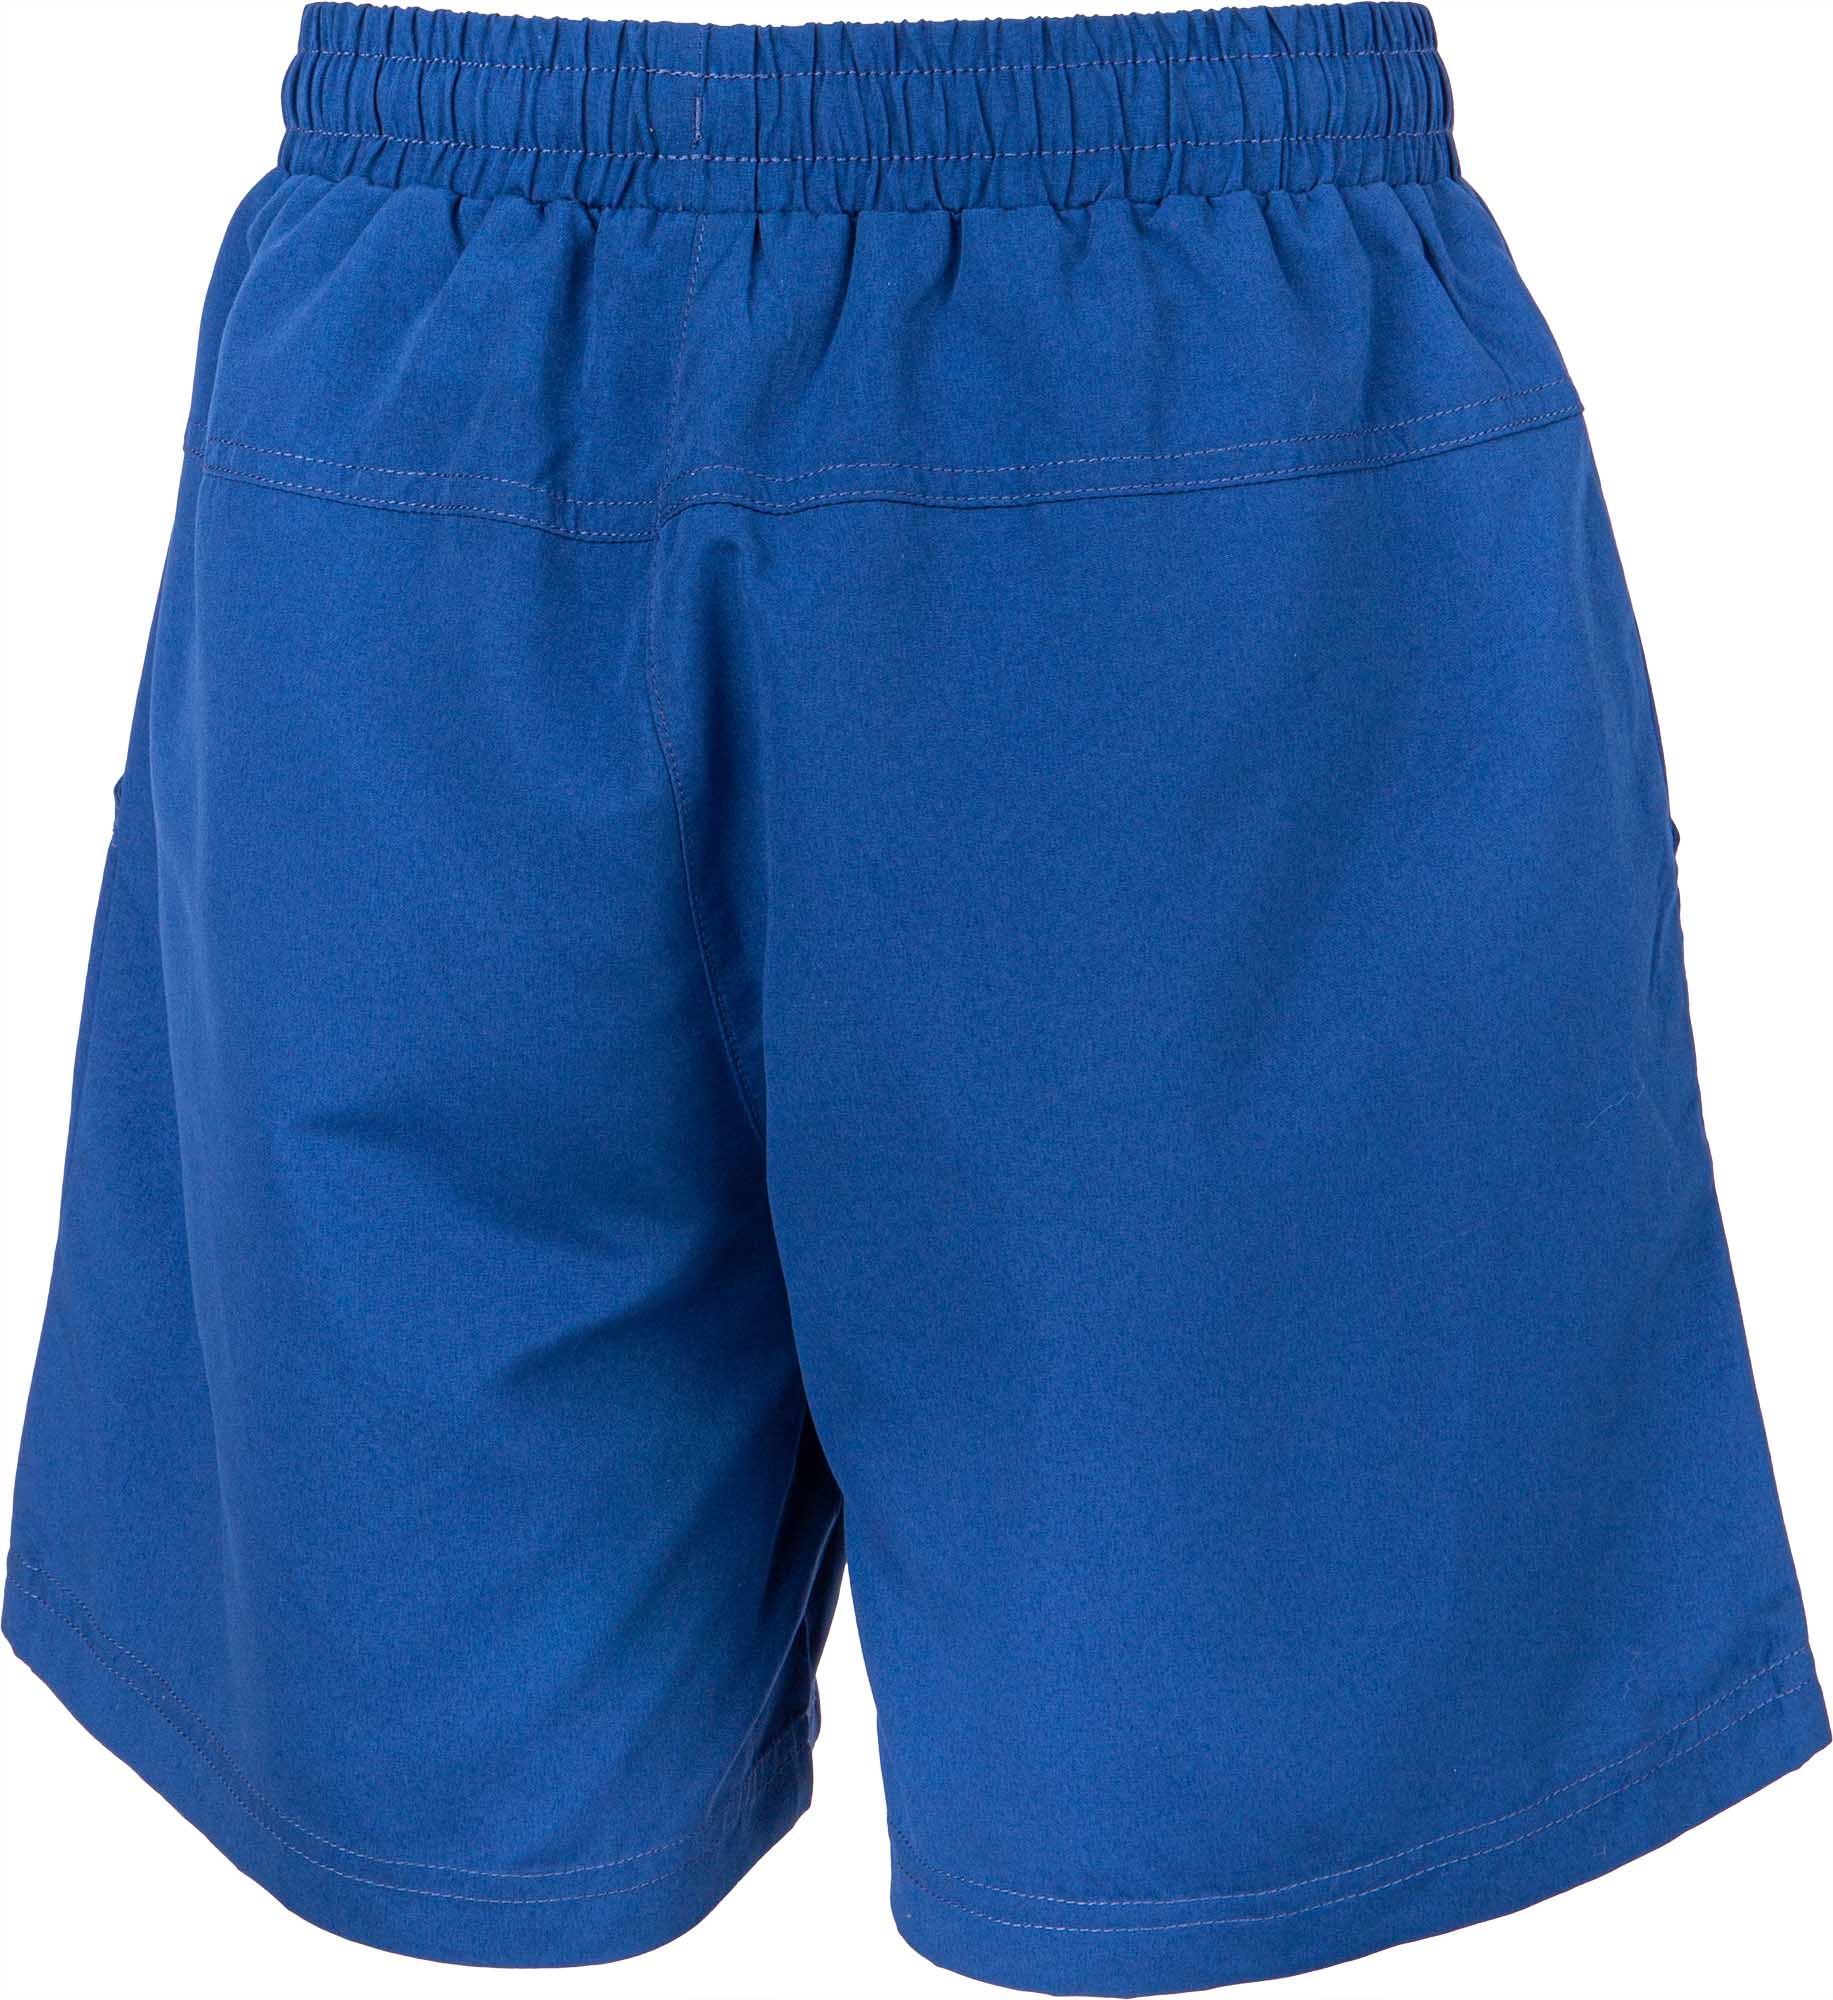 Boys’ sports shorts